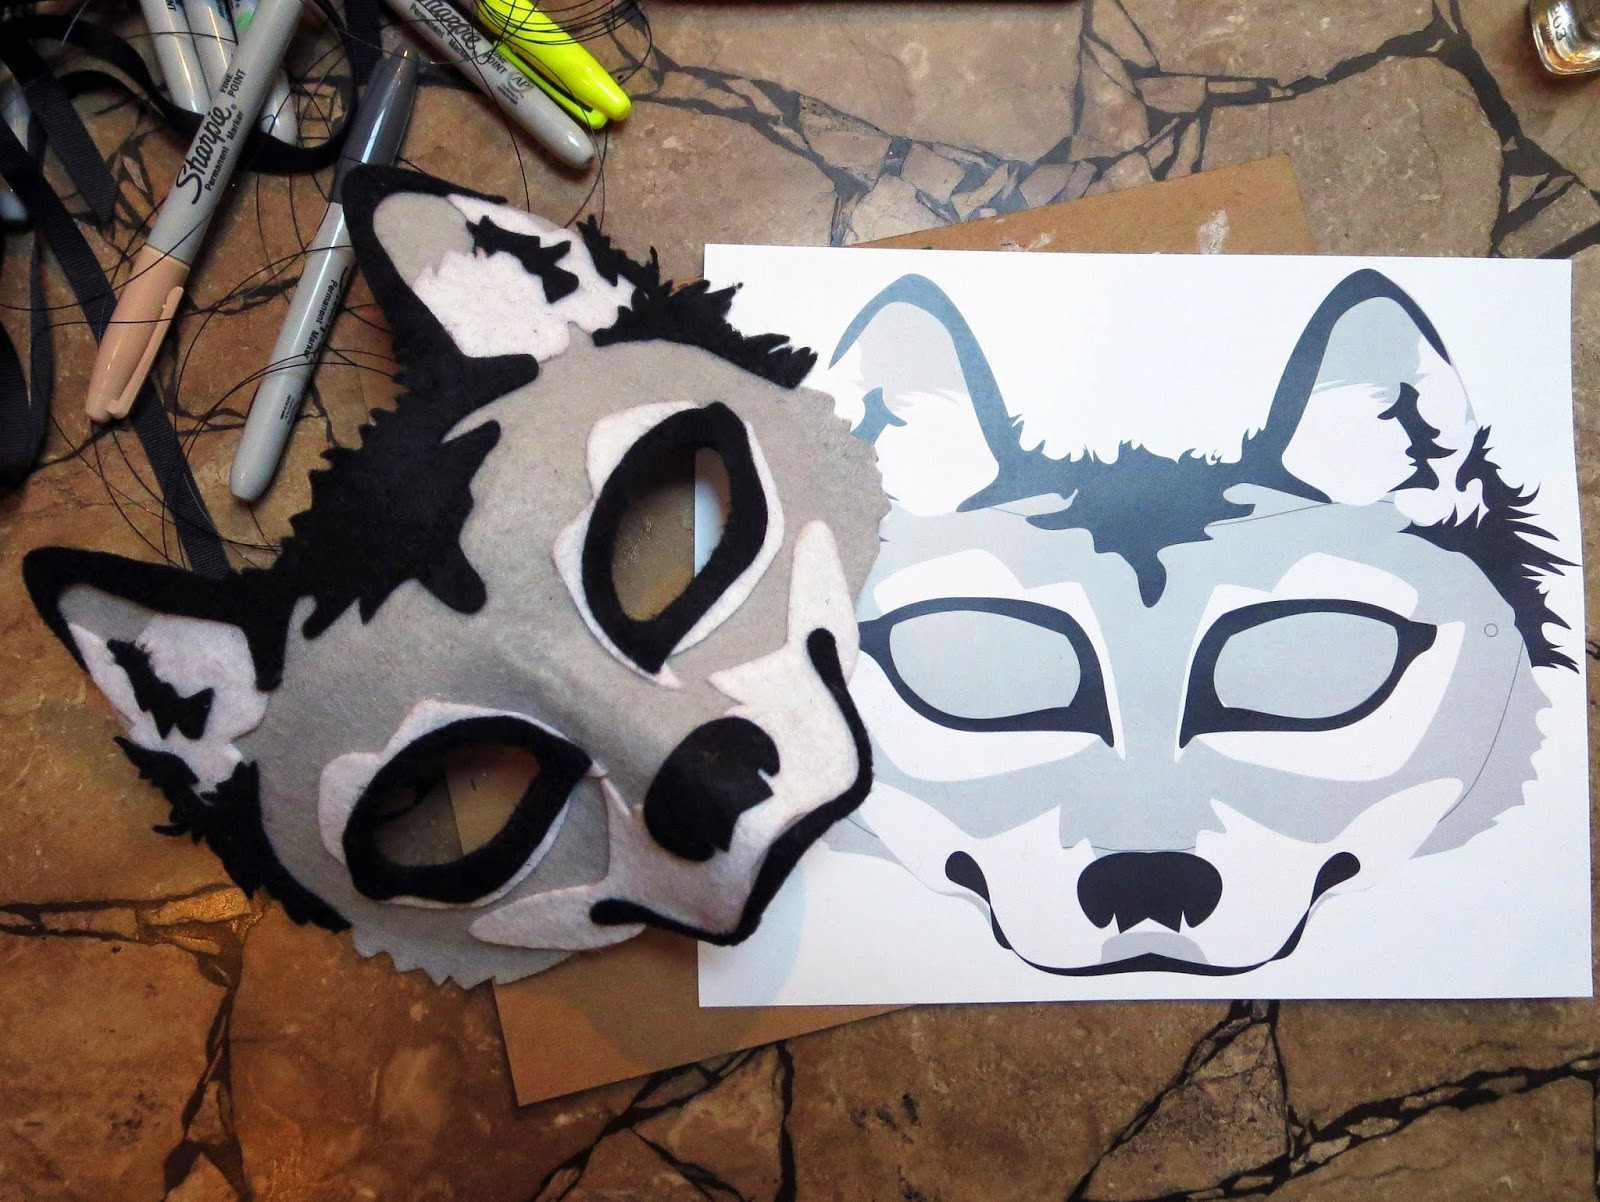 Best ideas about DIY Wolf Mask
. Save or Pin Happenstance Wedding Felt Animal Masks Now.